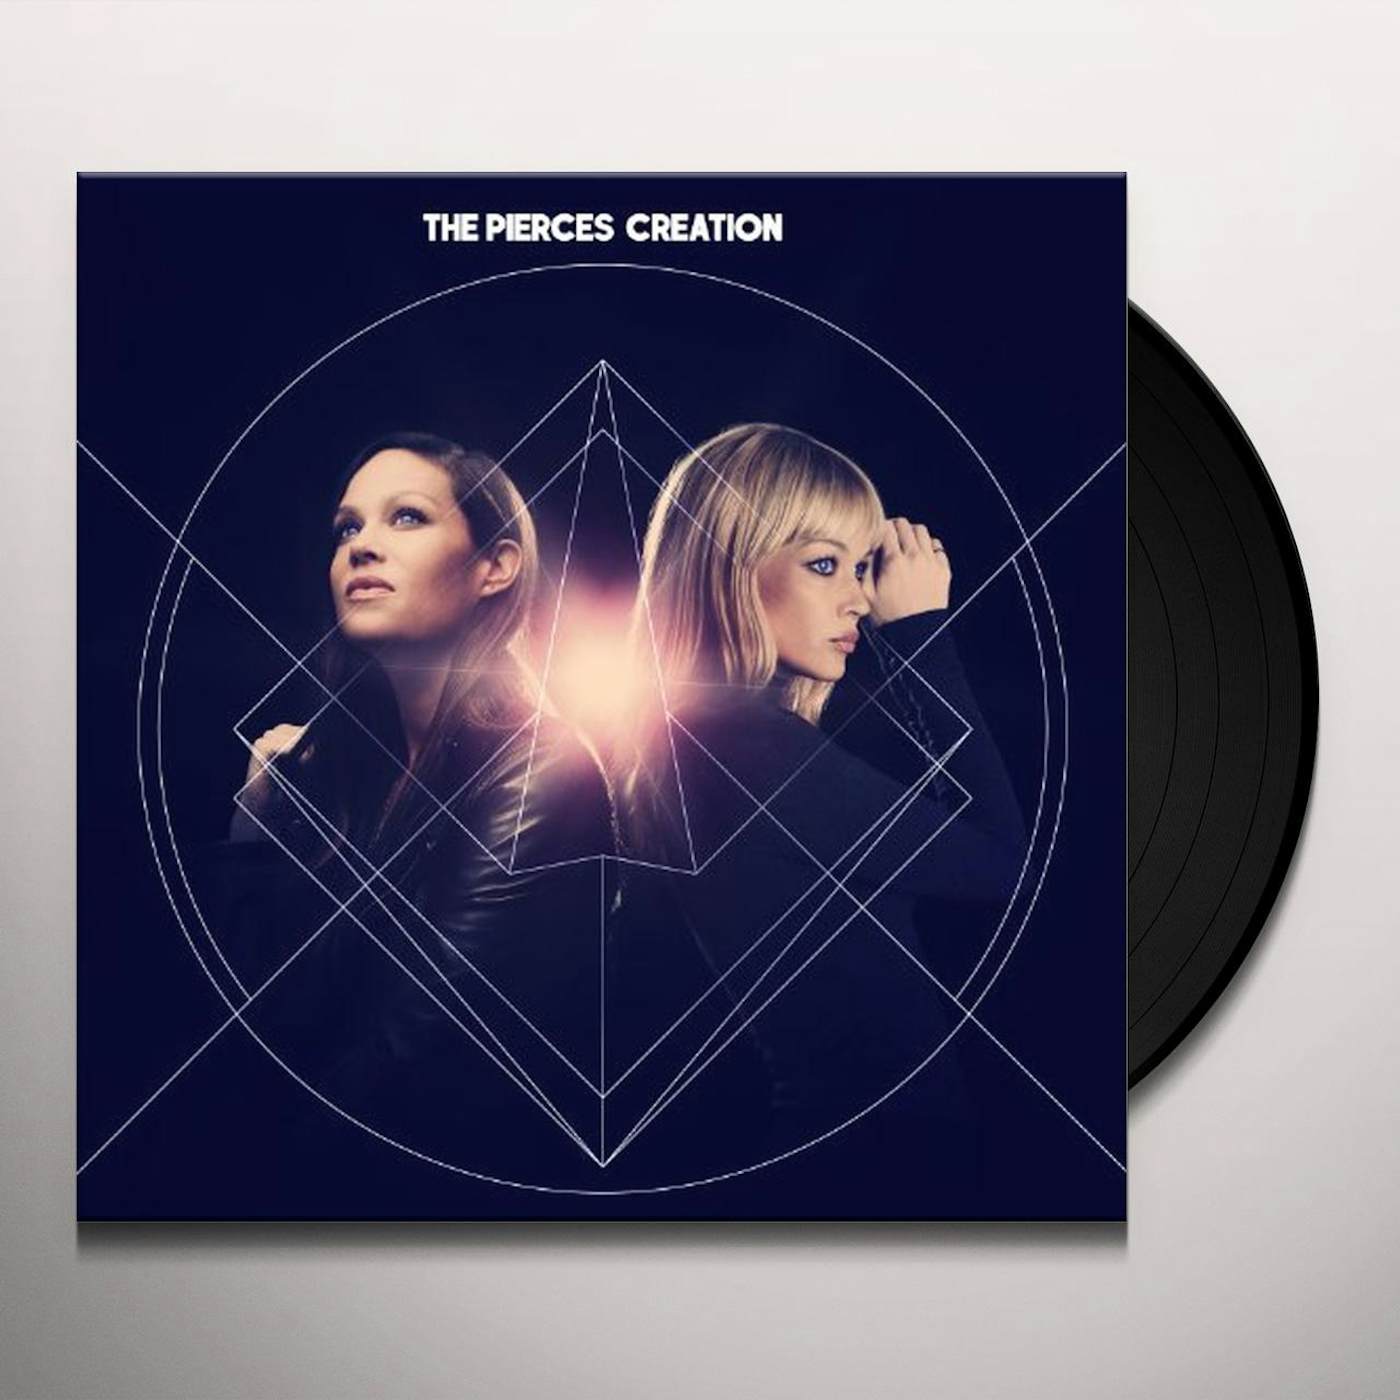 The Pierces Creation Vinyl Record